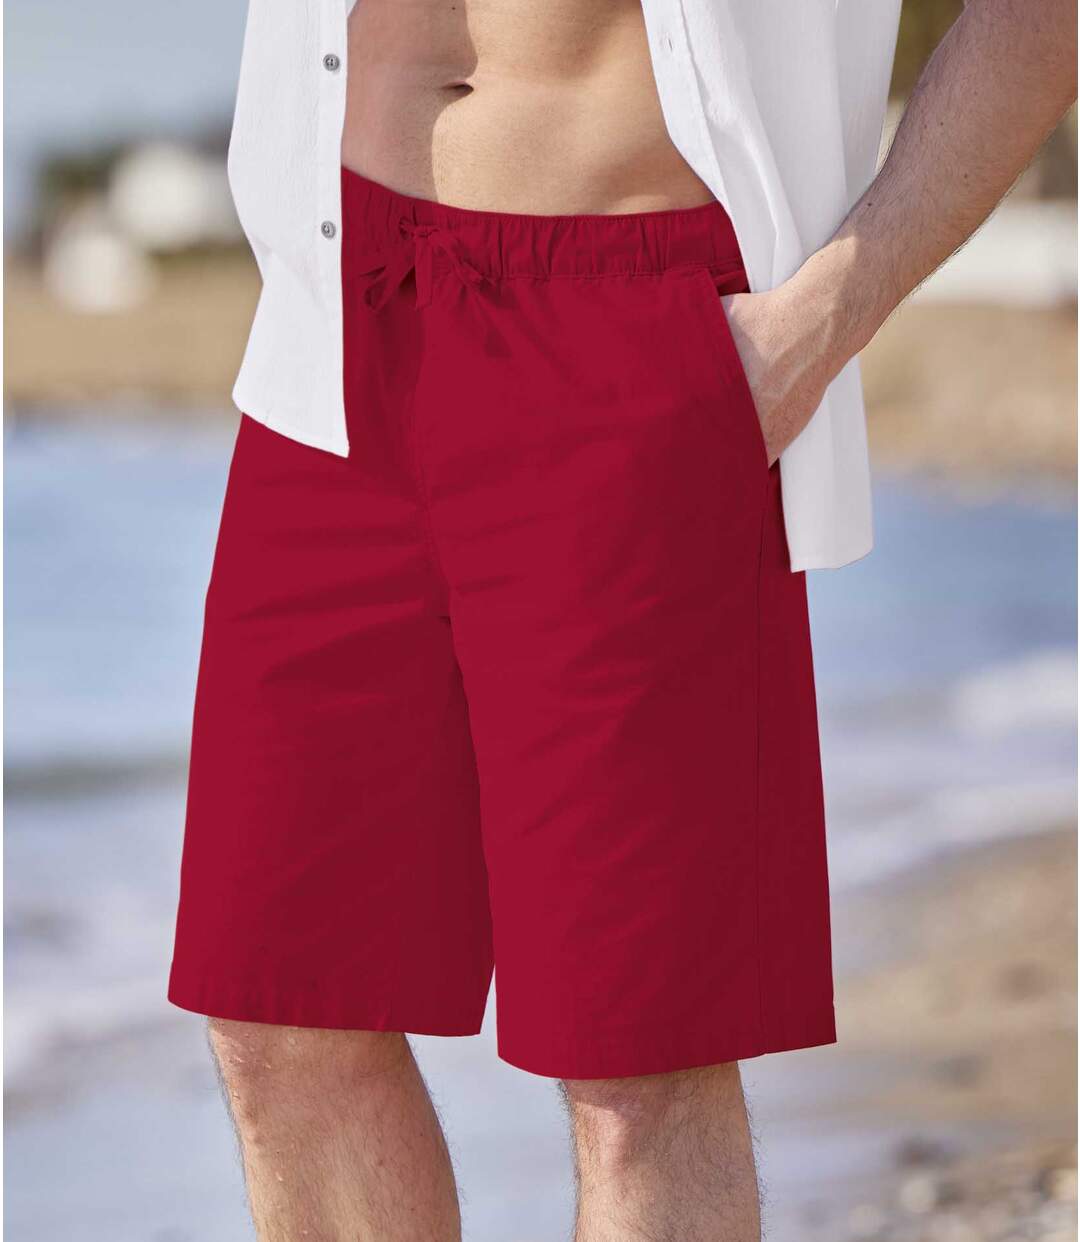 Pack of 2 Men's Casual Shorts - Red Gray Atlas For Men